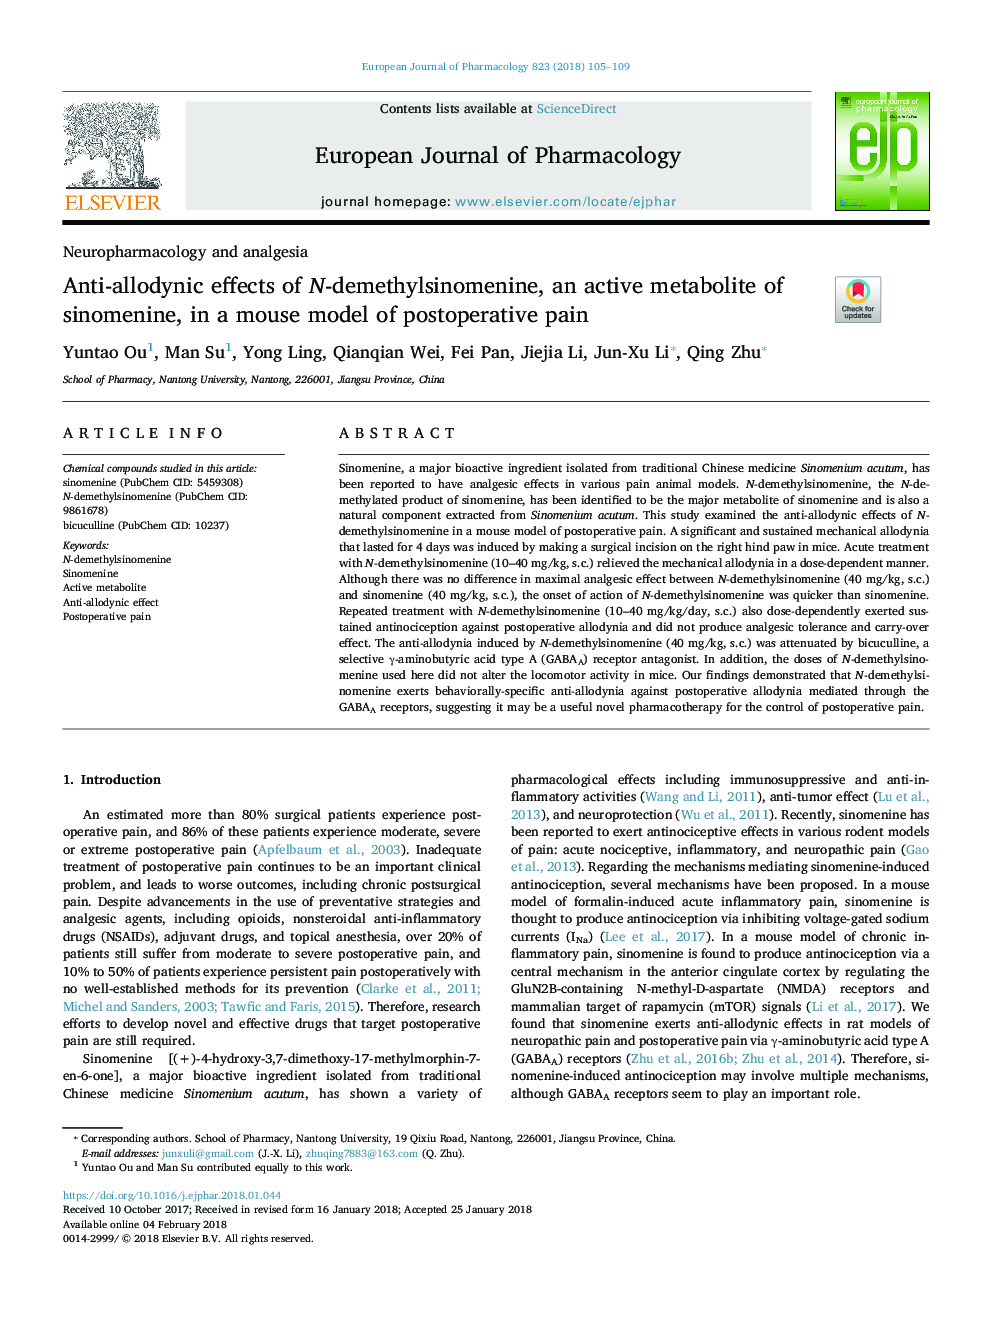 Anti-allodynic effects of N-demethylsinomenine, an active metabolite of sinomenine, in a mouse model of postoperative pain